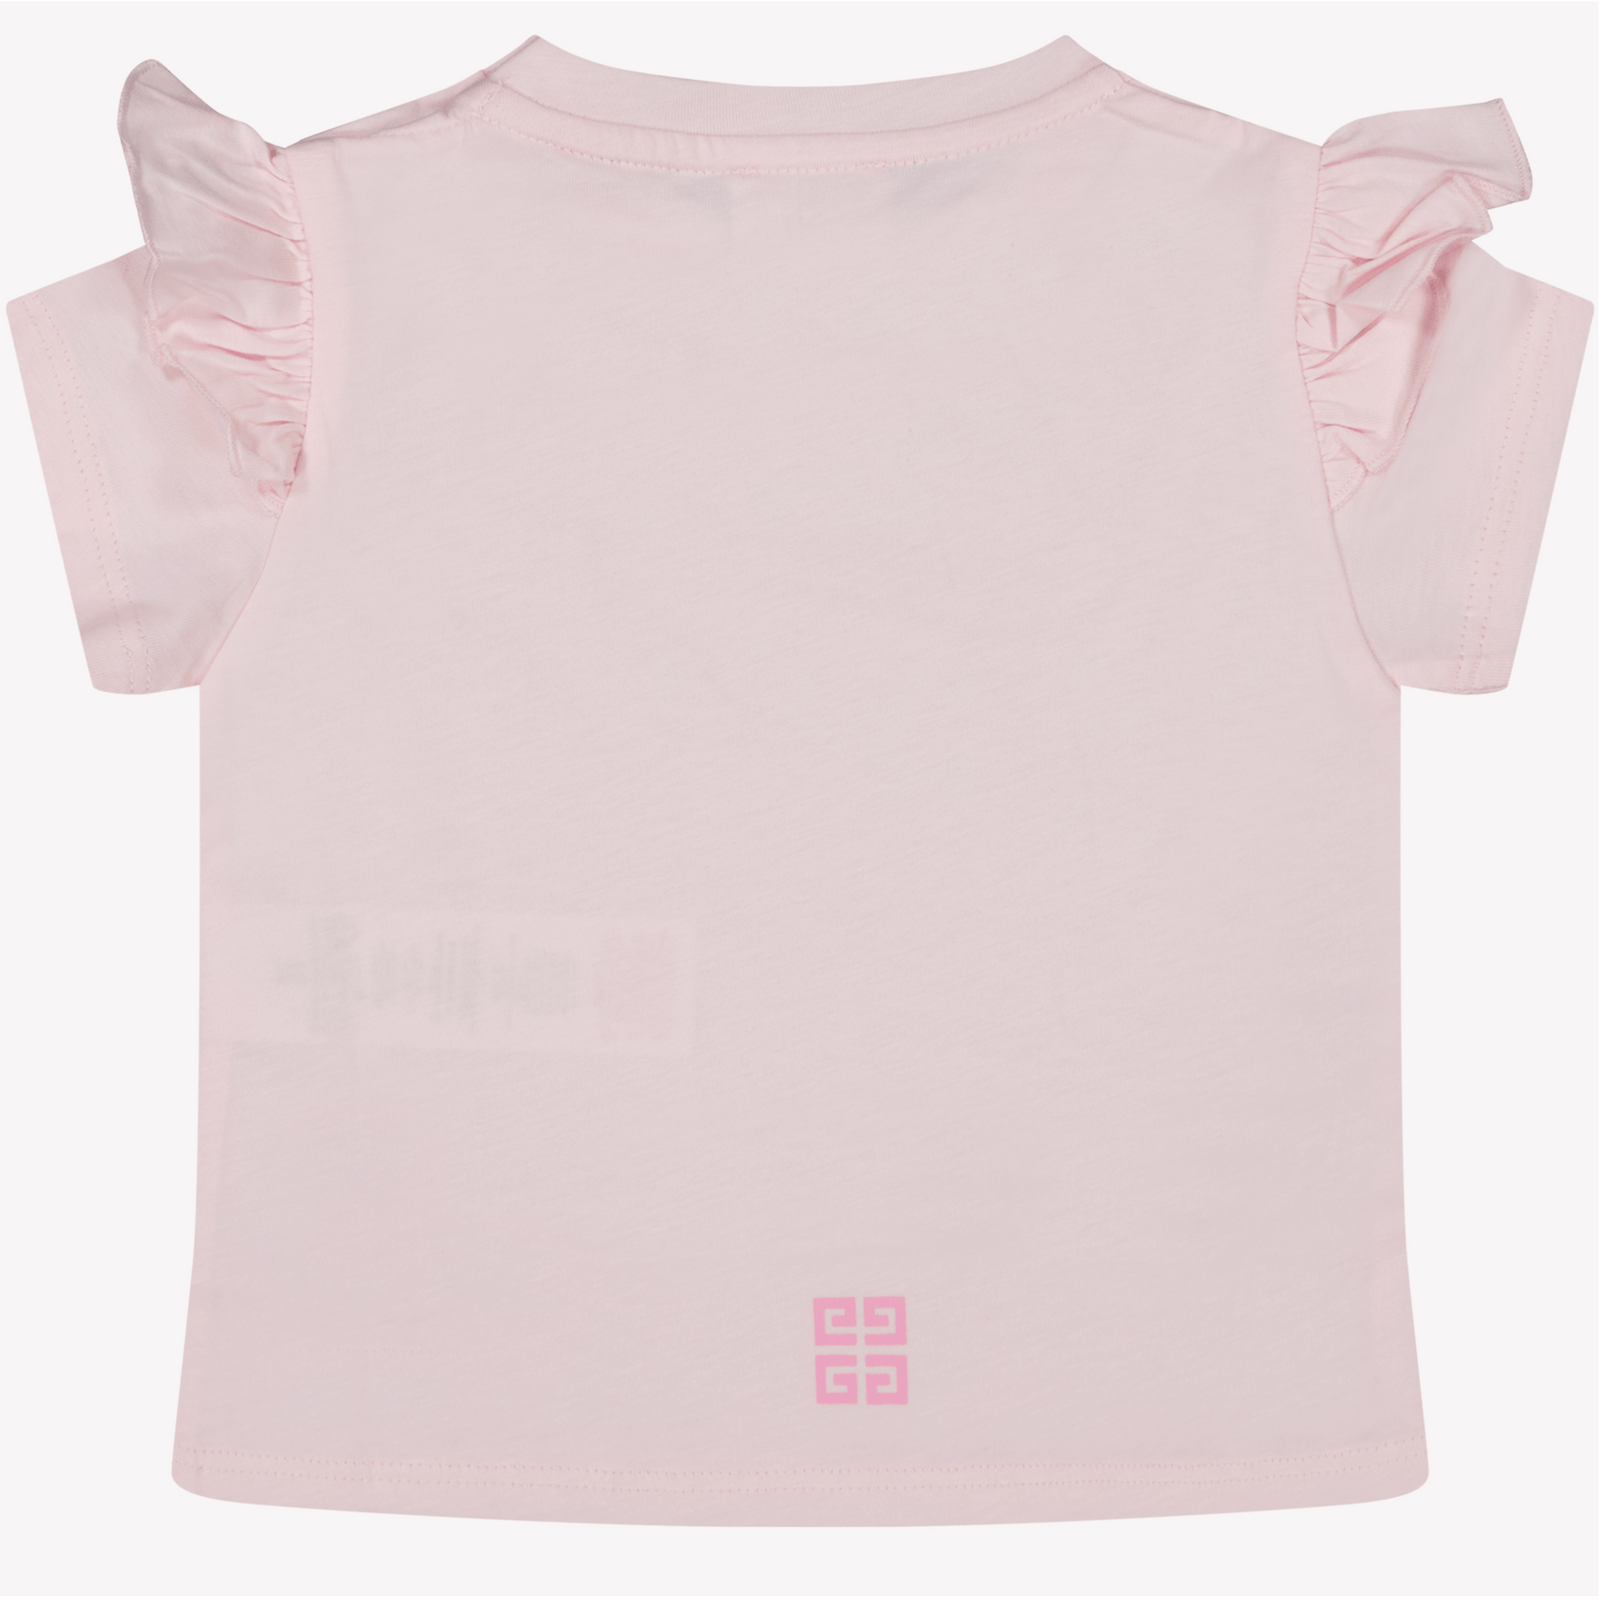 Givenchy Baby Meisjes T-Shirt Licht Roze 6 mnd